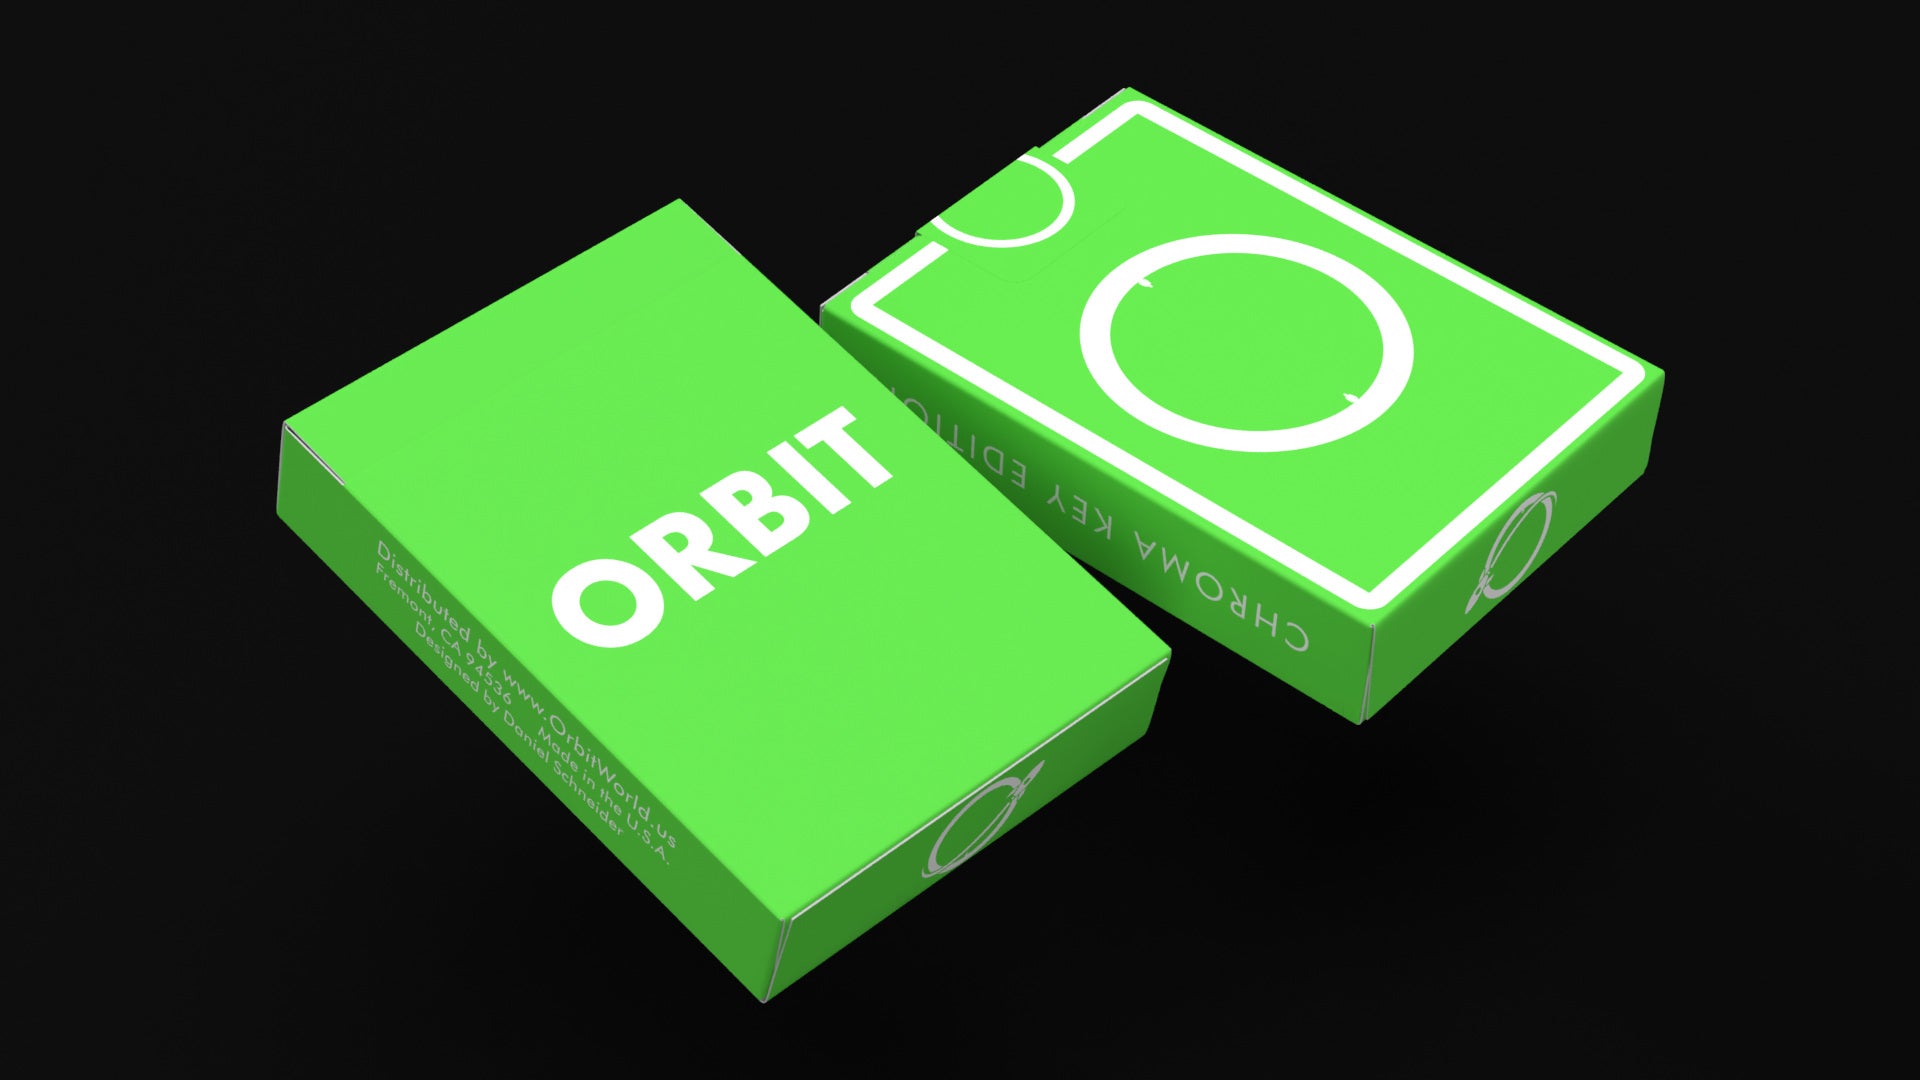 Orbit - Chroma Key Edition